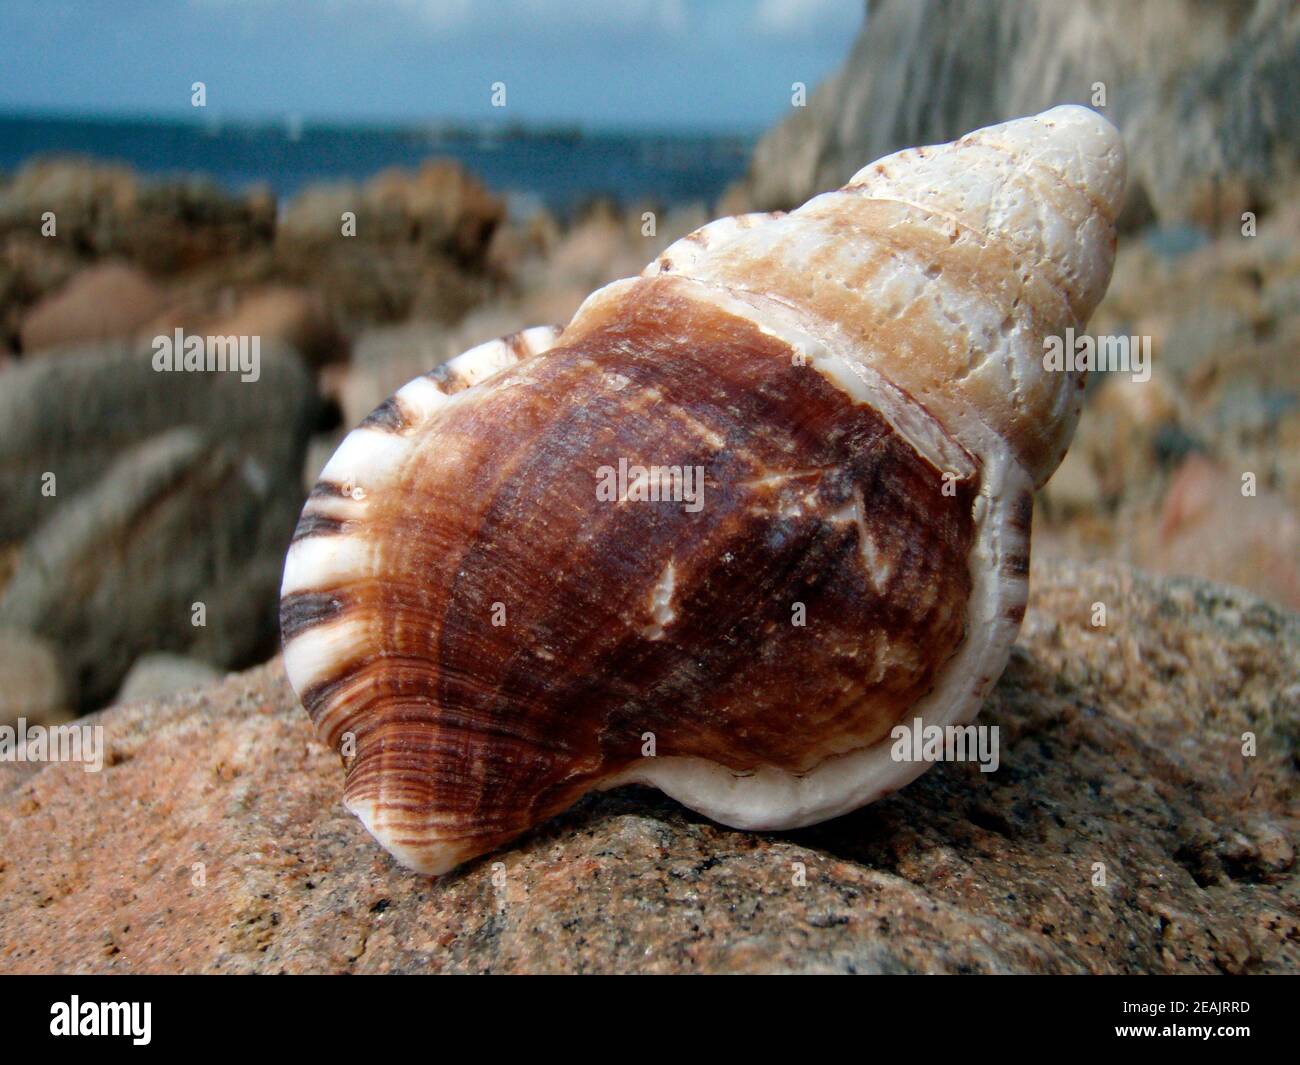 sea shells at the beach Stock Photo